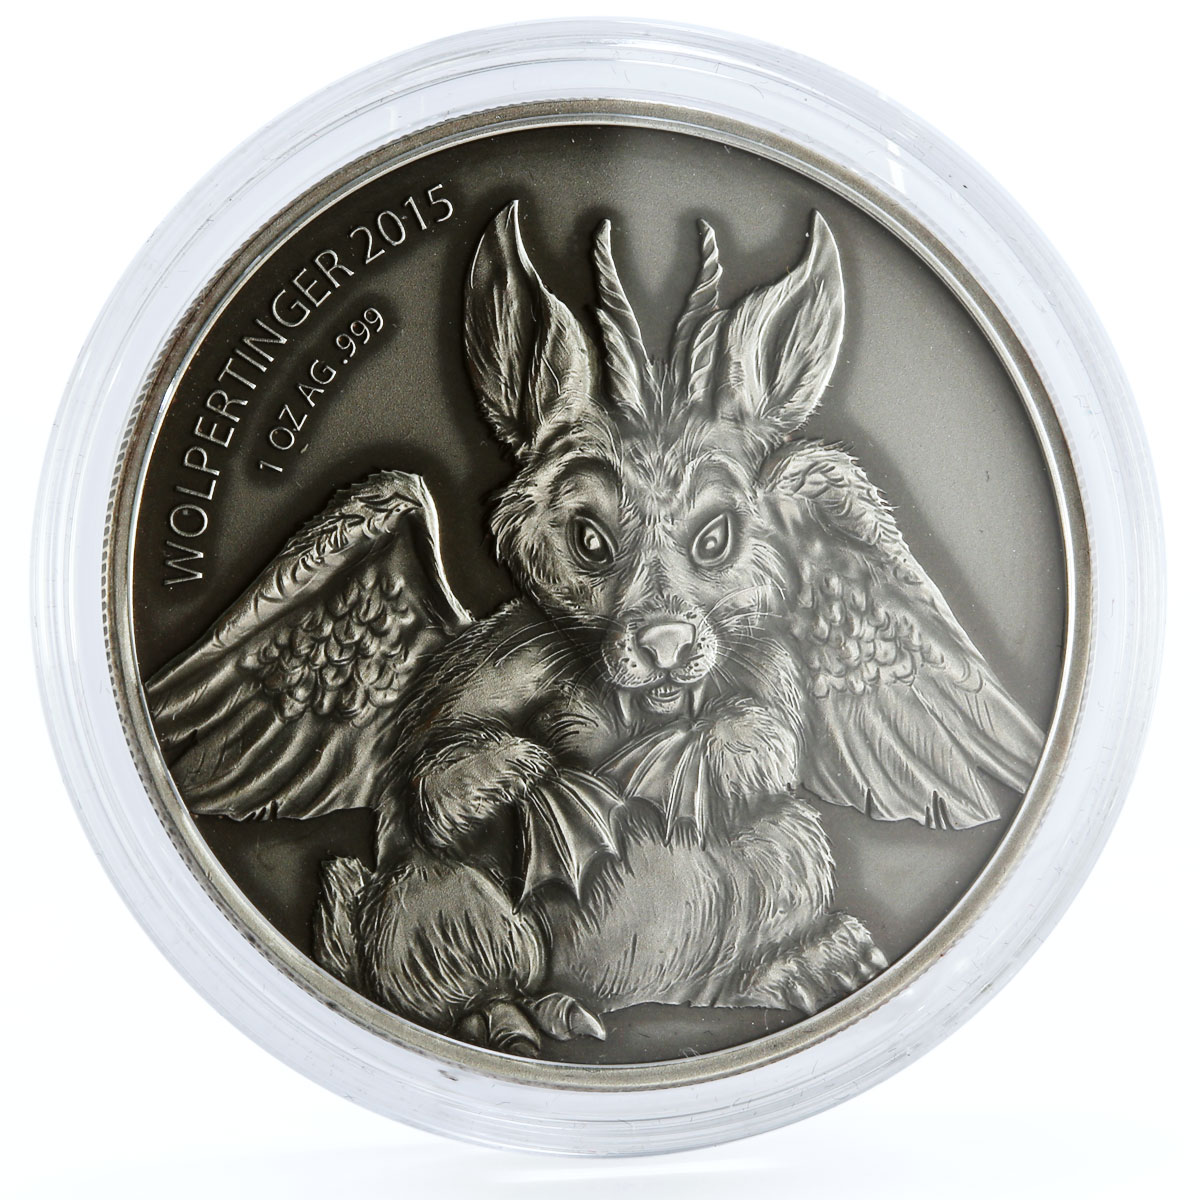 Burkina Faso 1000 francs The Chimeras Wolpertinger Jackalope silver coin 2015